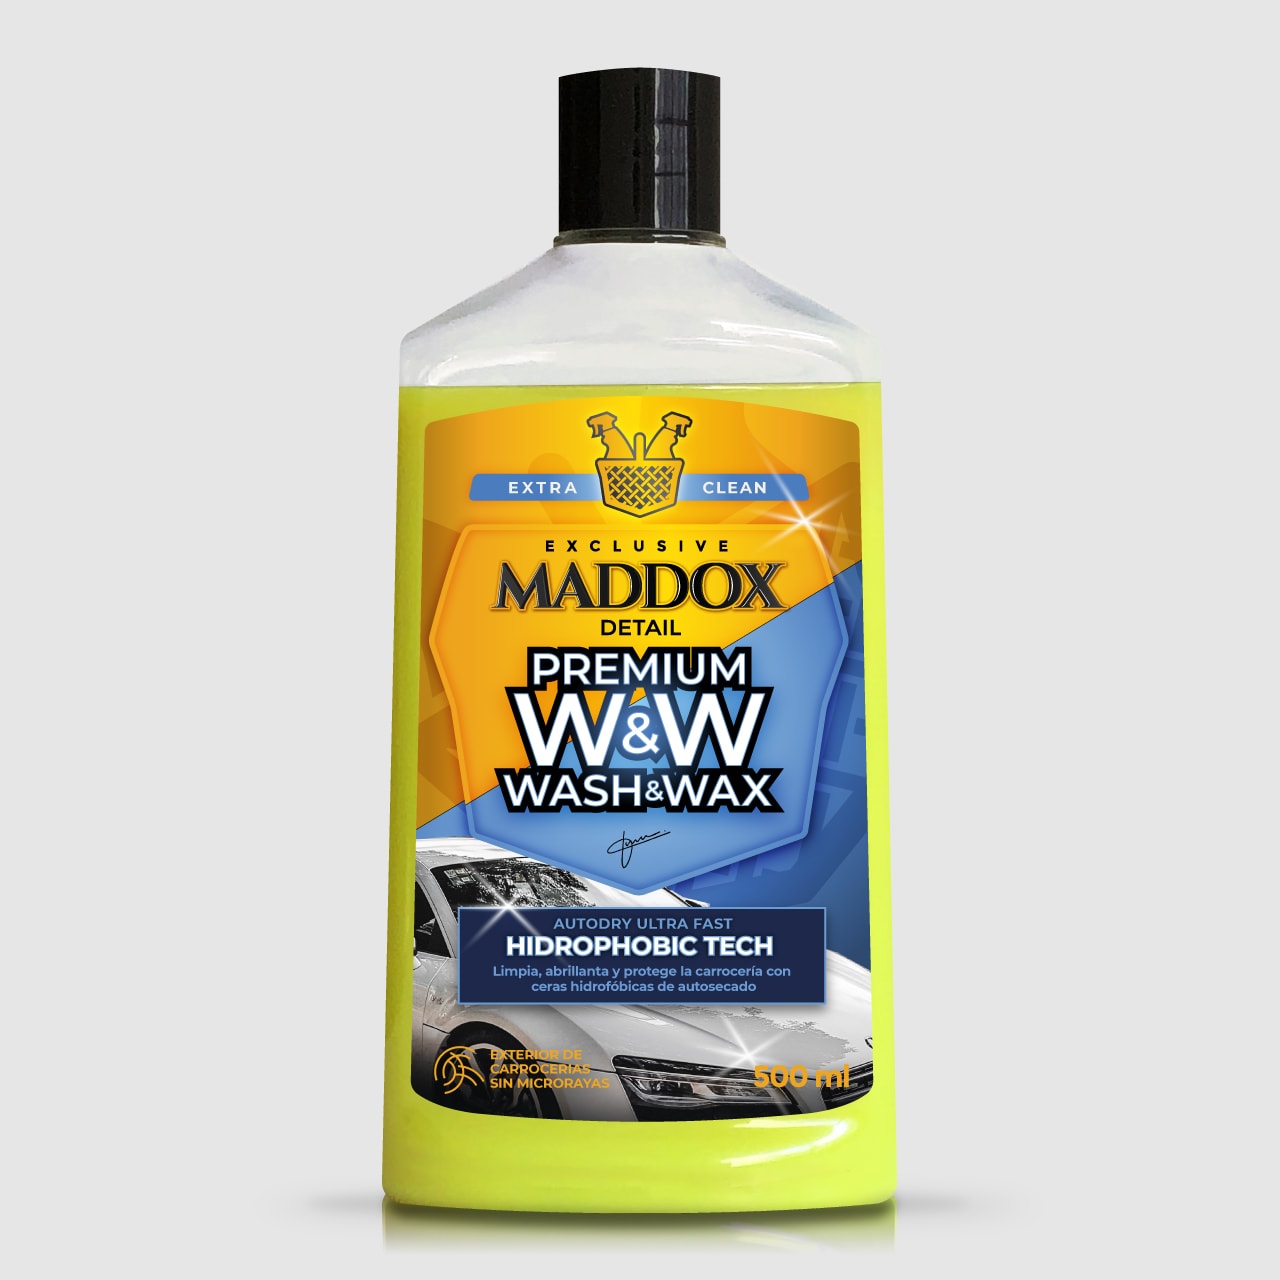 Kit Lavado Coche - Maddox Wash Bucket Kit